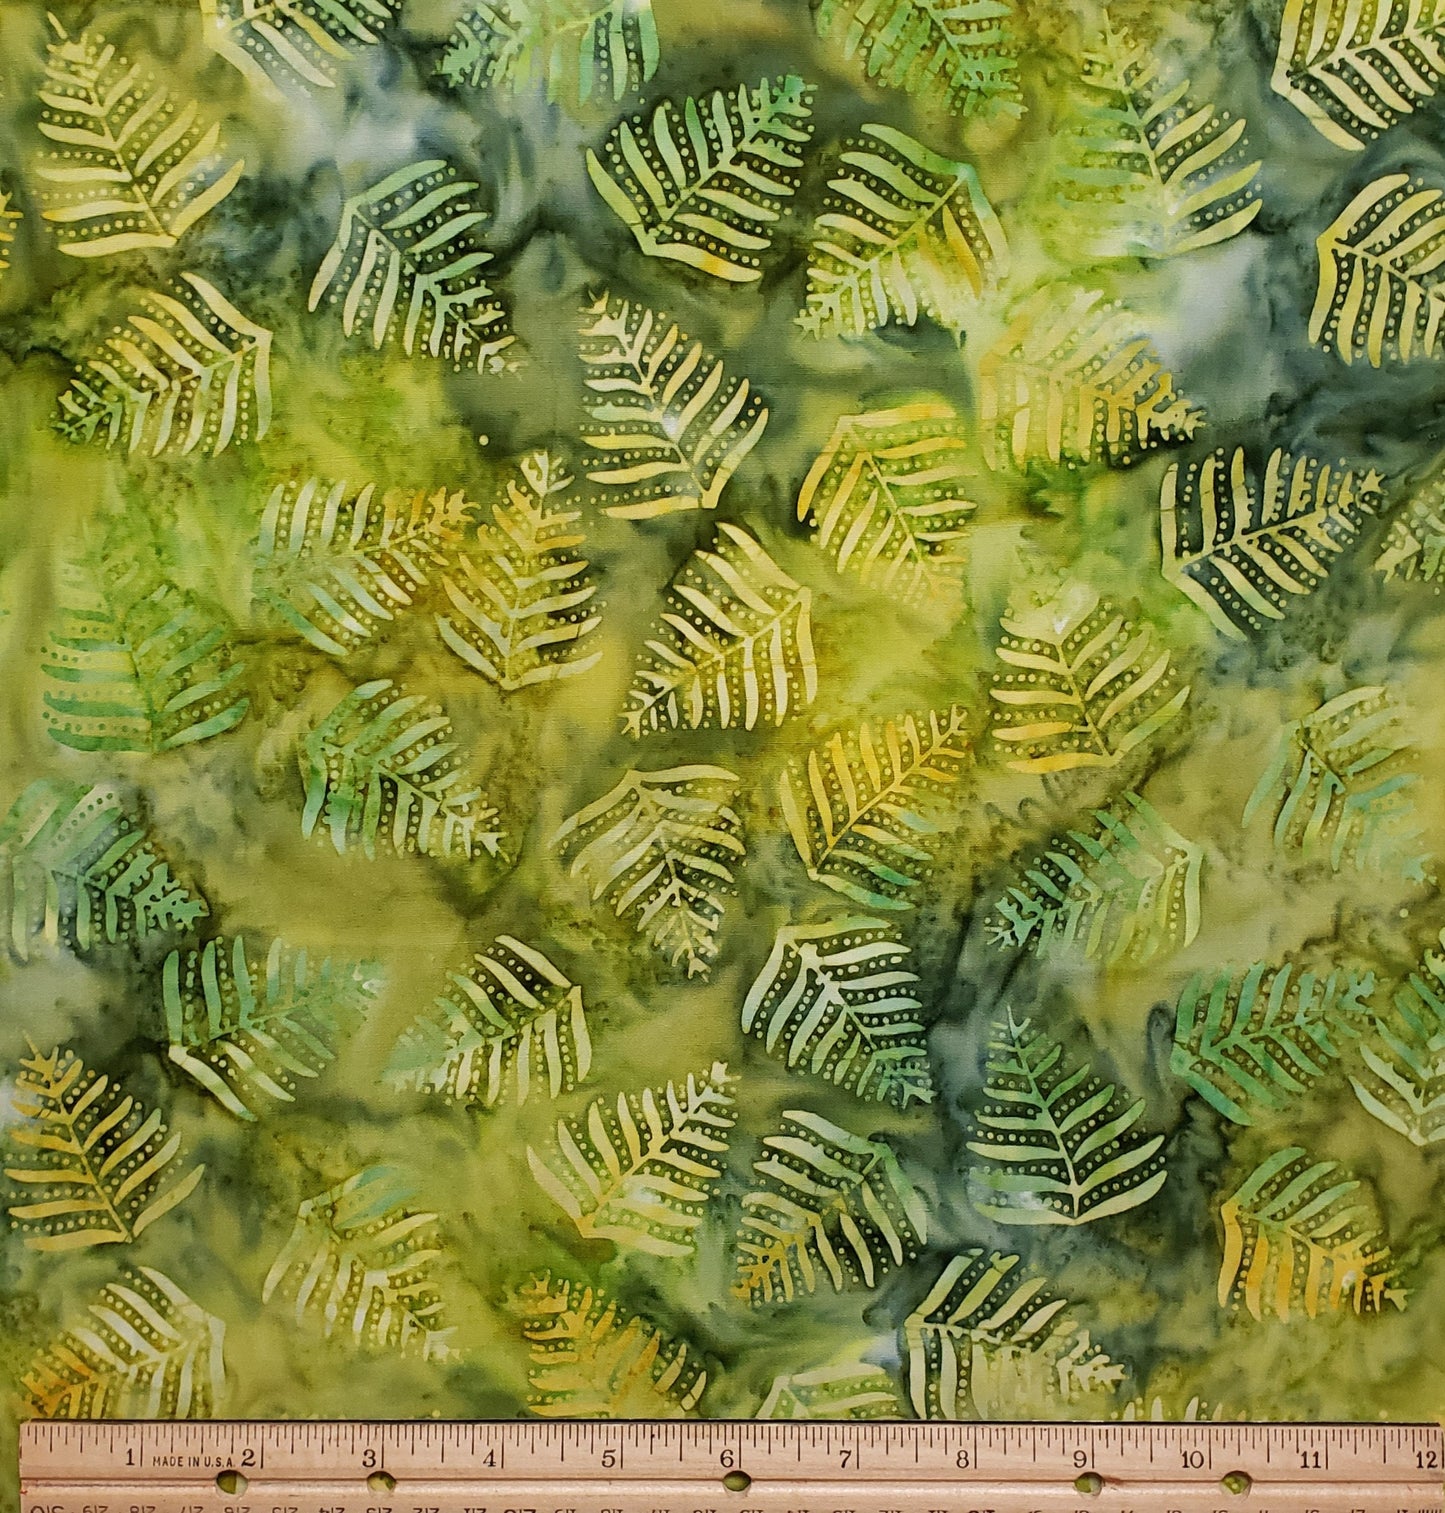 BATIK - Medium Dark Green and Gold Fabric with Gold Leaf/Tree Pattern